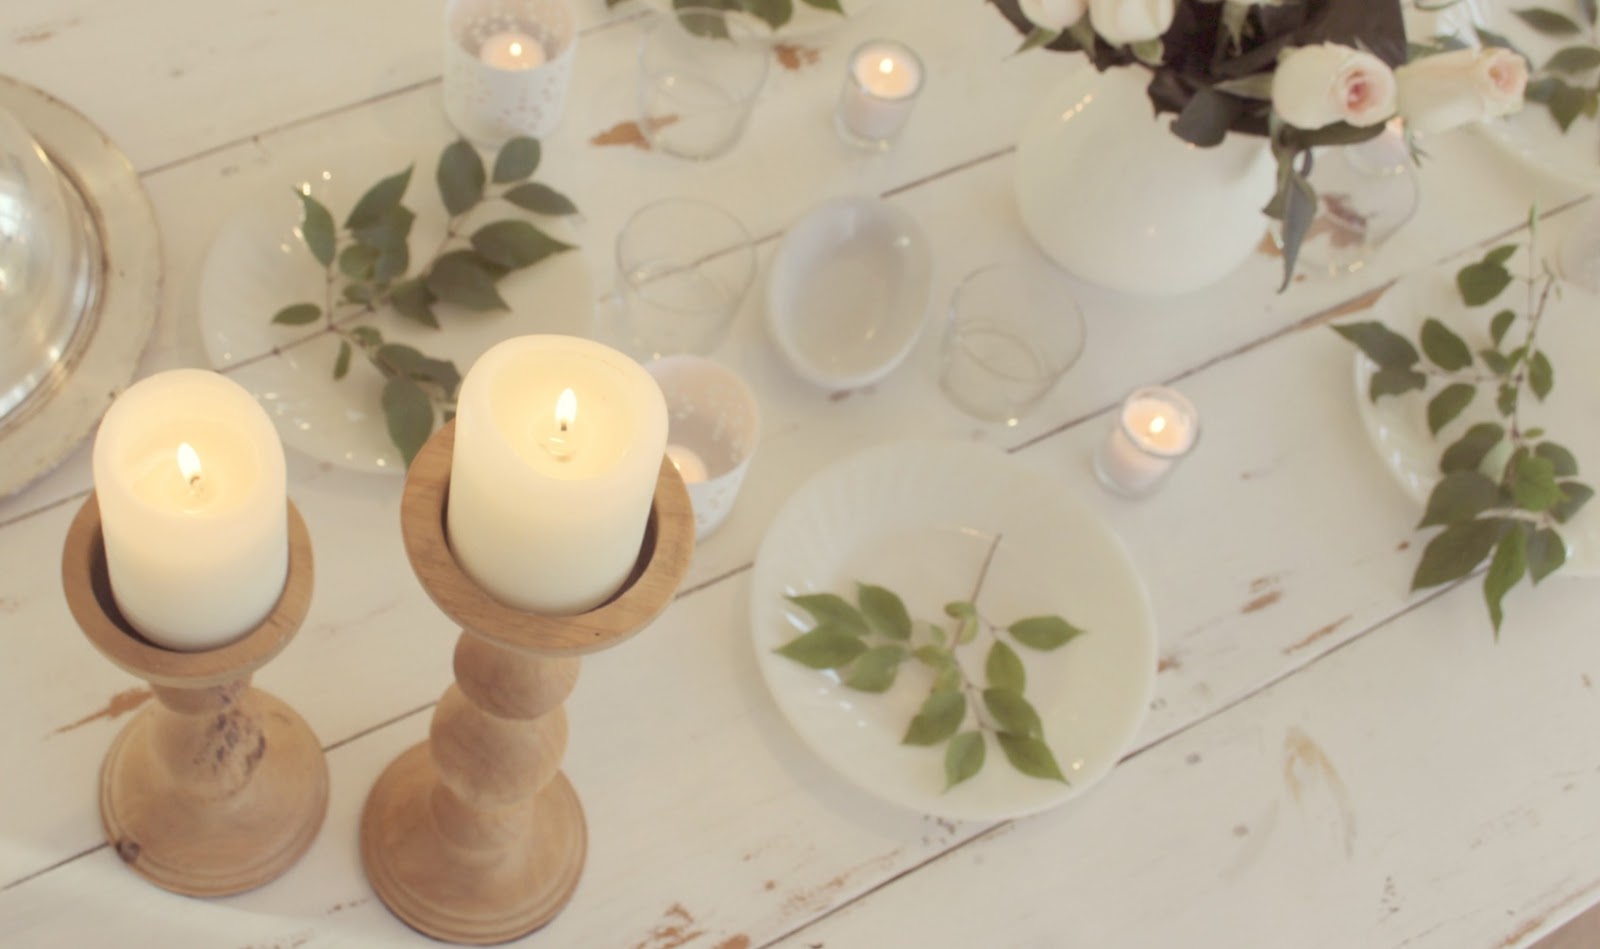 hellolovely-hello-lovely-studio-romantic-farmhouse-table-holiday-roses-white-gold